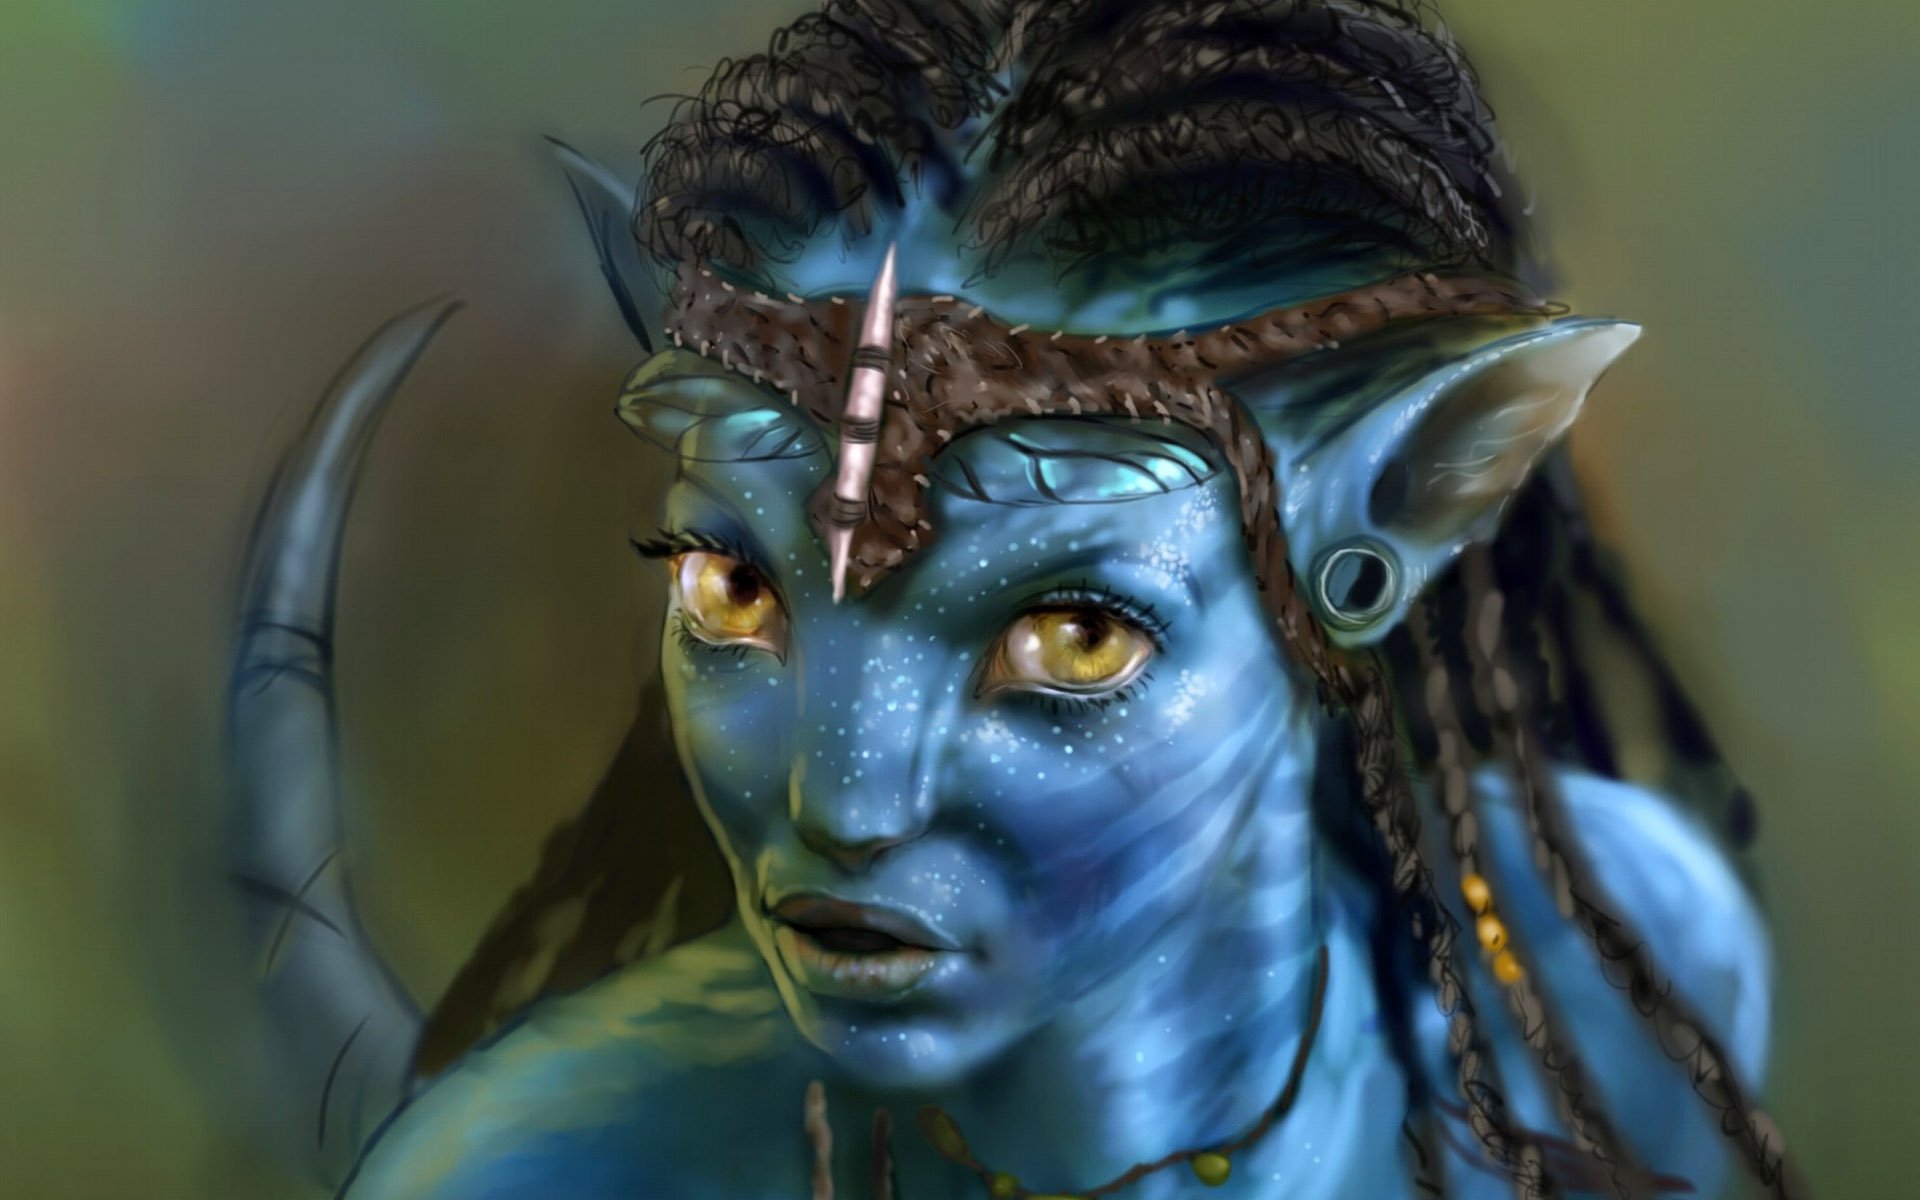 avatar the woman warrior beauty fiction movie